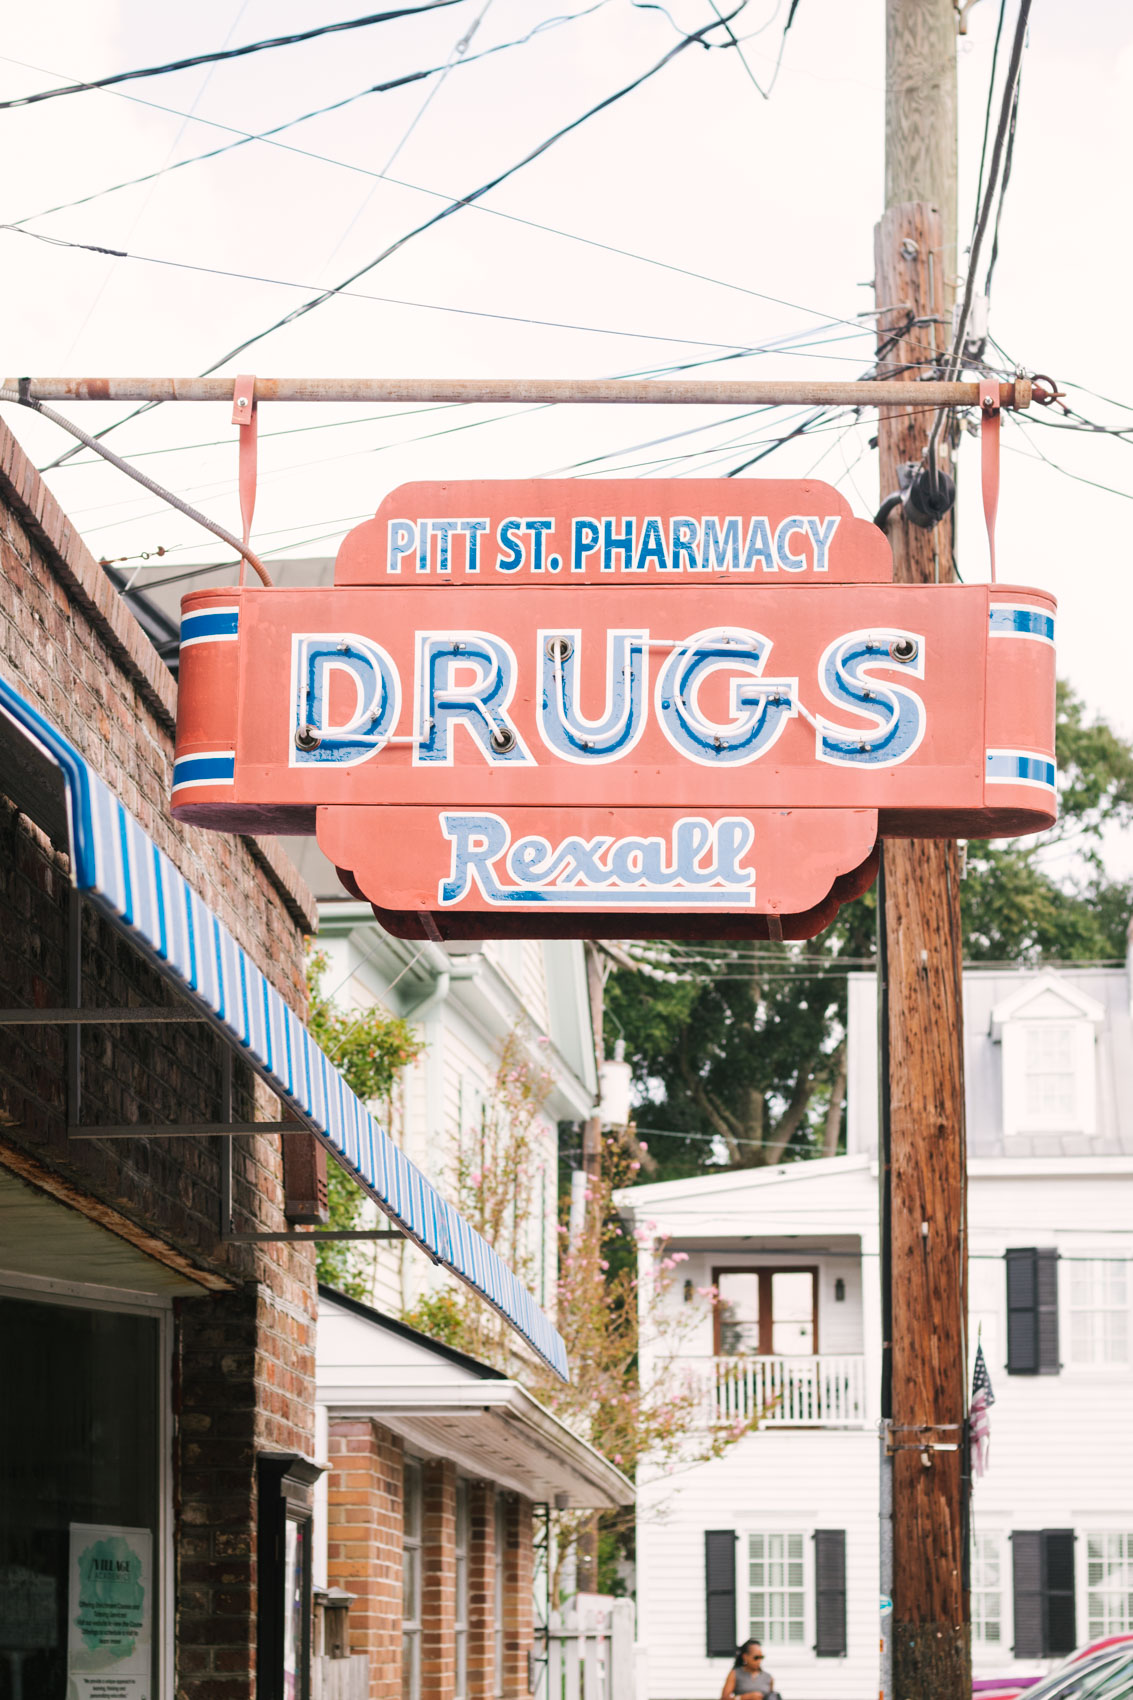 Pitt Street Pharmacy in the Old Village neighborhood of Mt. Pleasant, SC